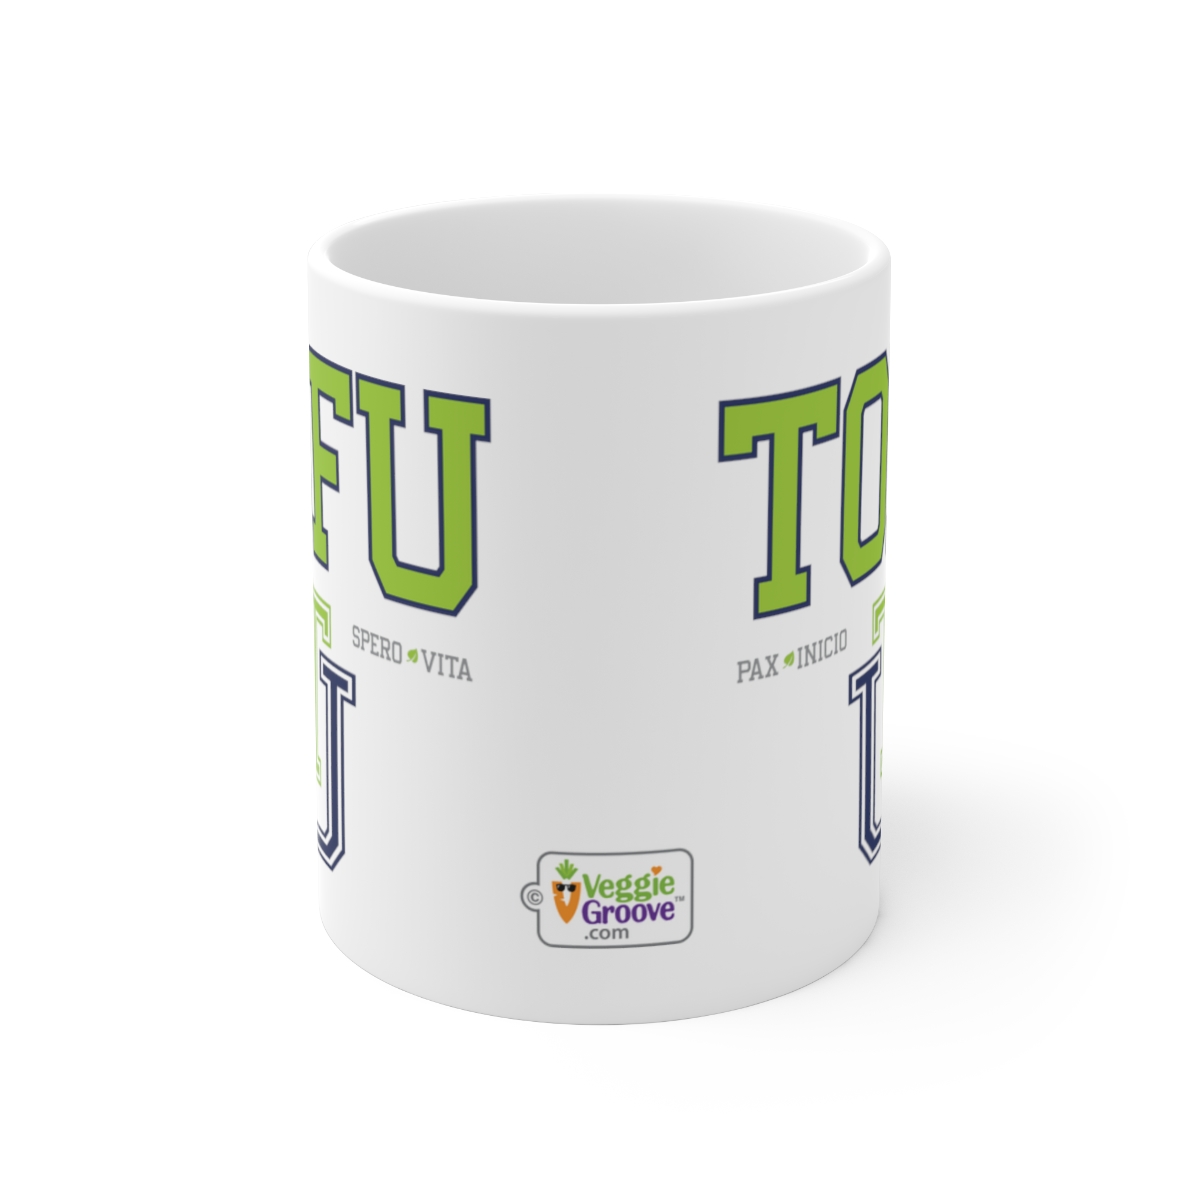 Tofu U Logo Ceramic Mug: Sip & Smile in Style!